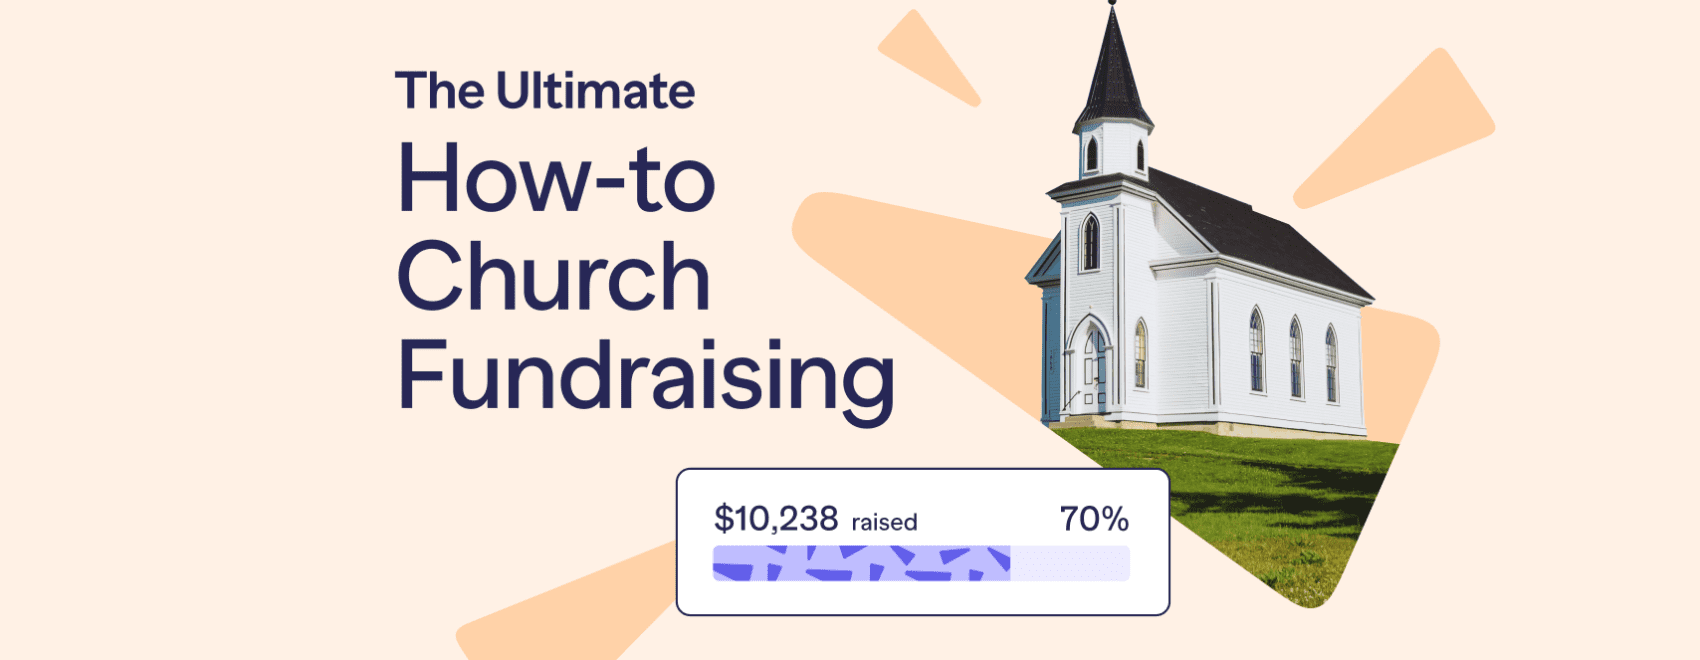 church fundraising article